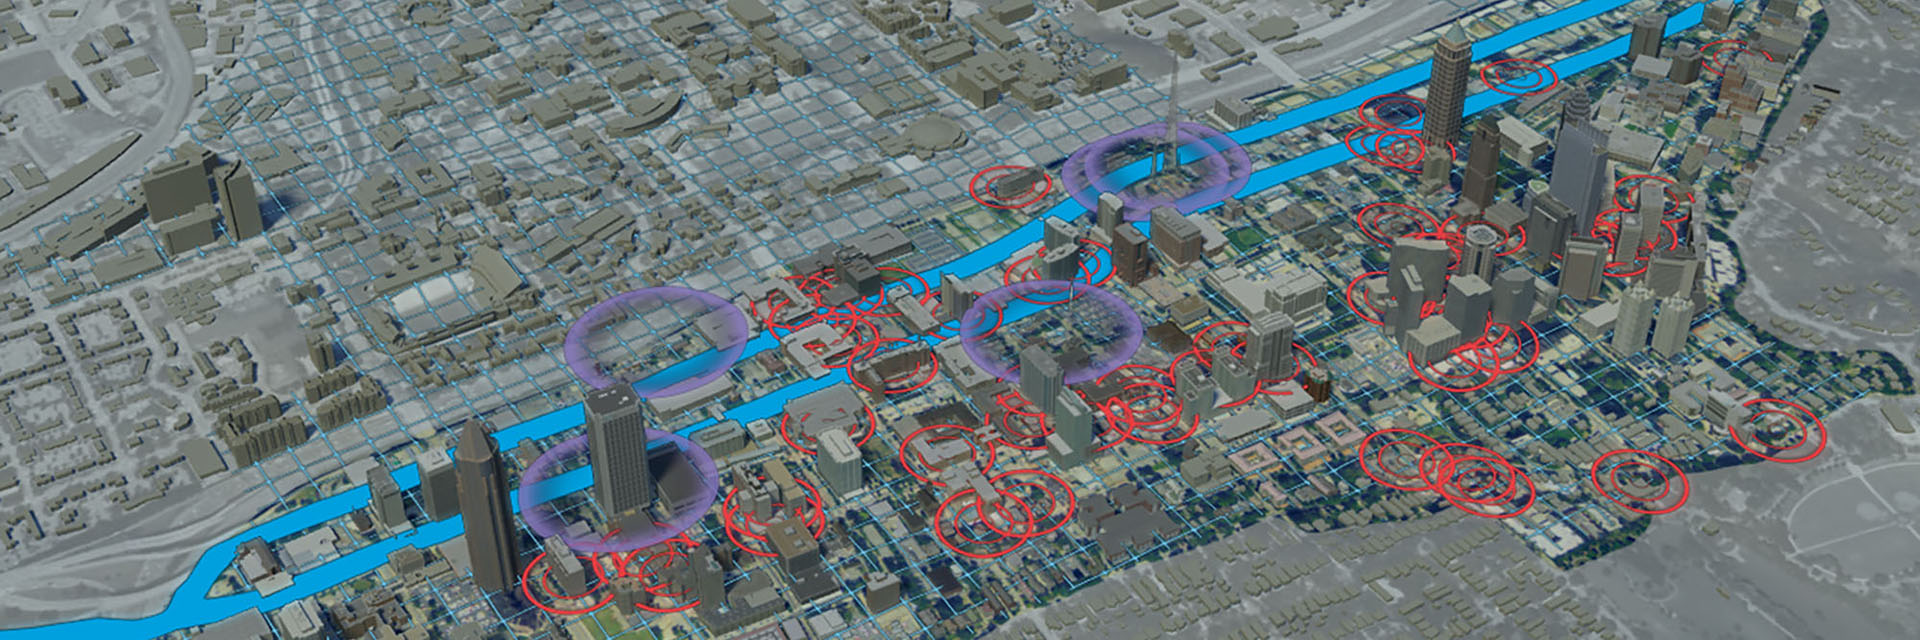 A screen shot of a 3D model of an urban area.